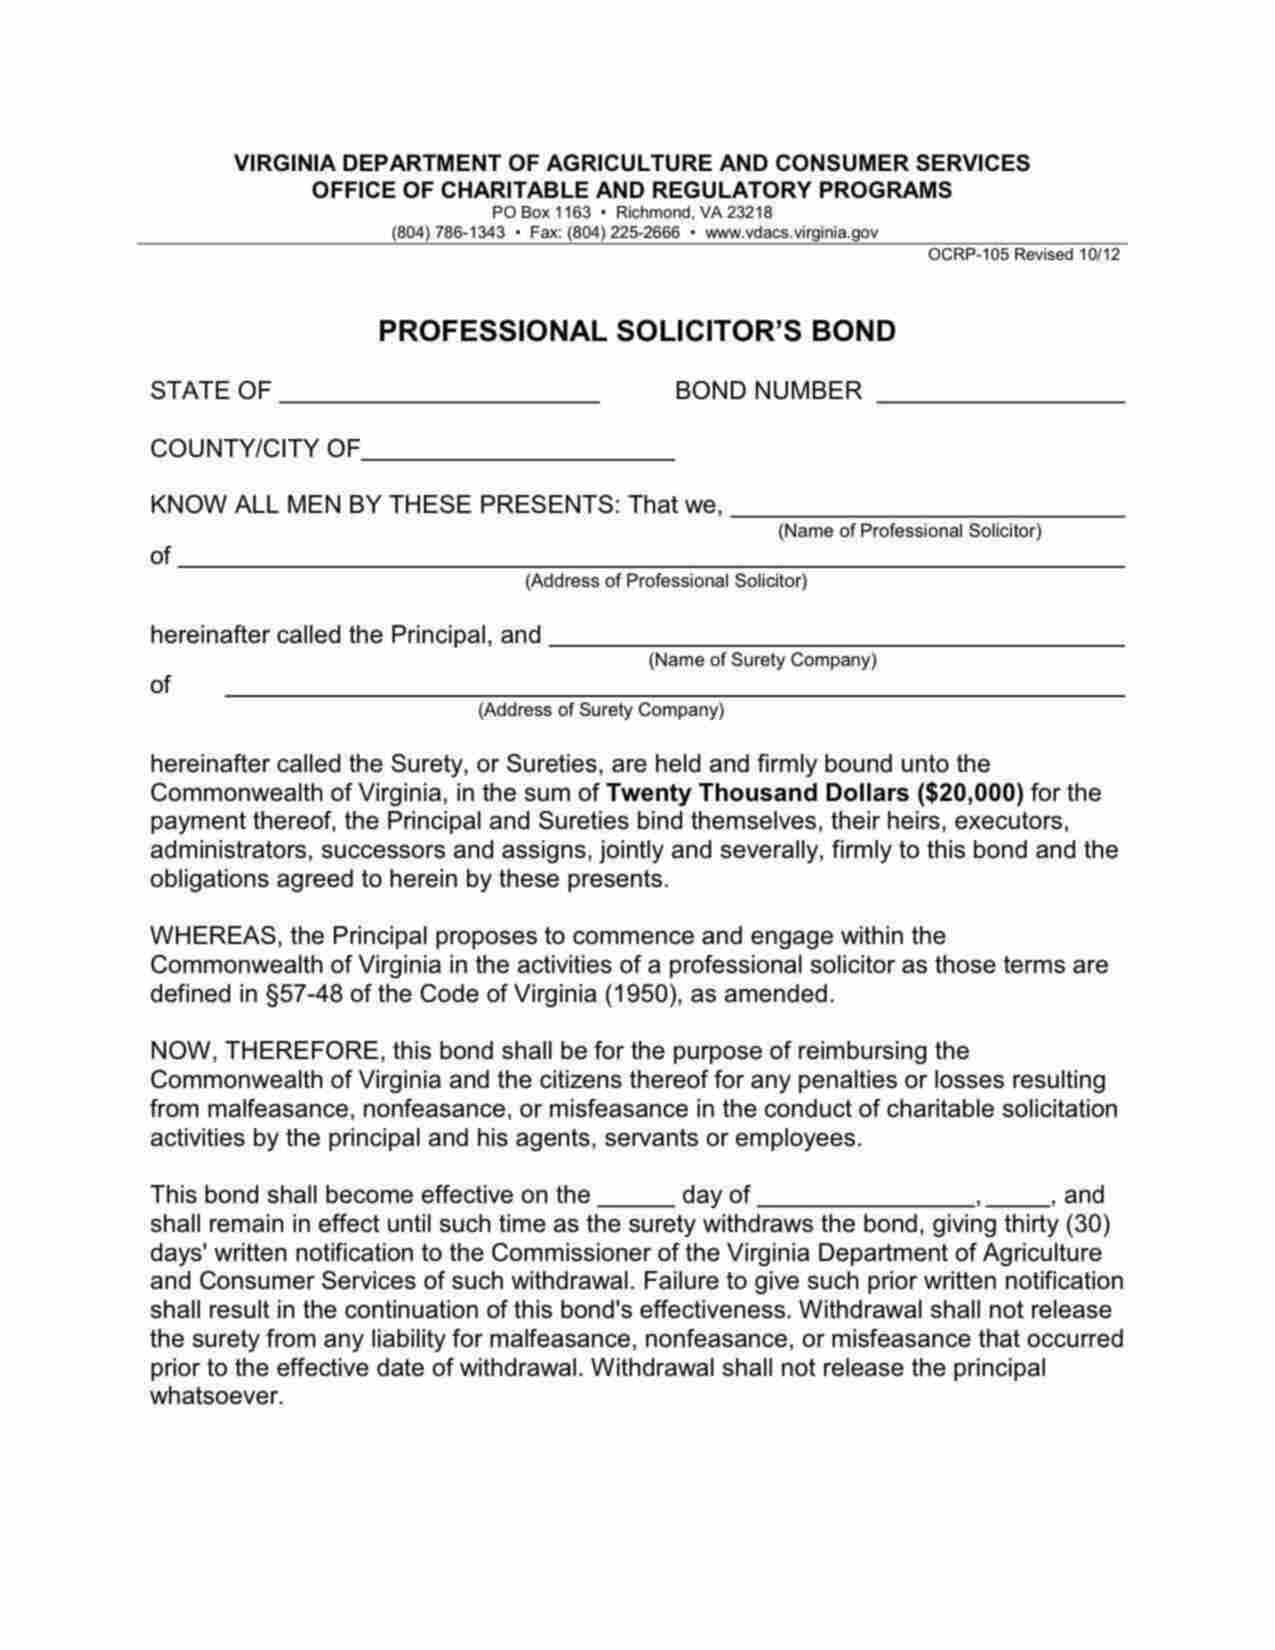 Virginia Professional Solicitor Bond Form